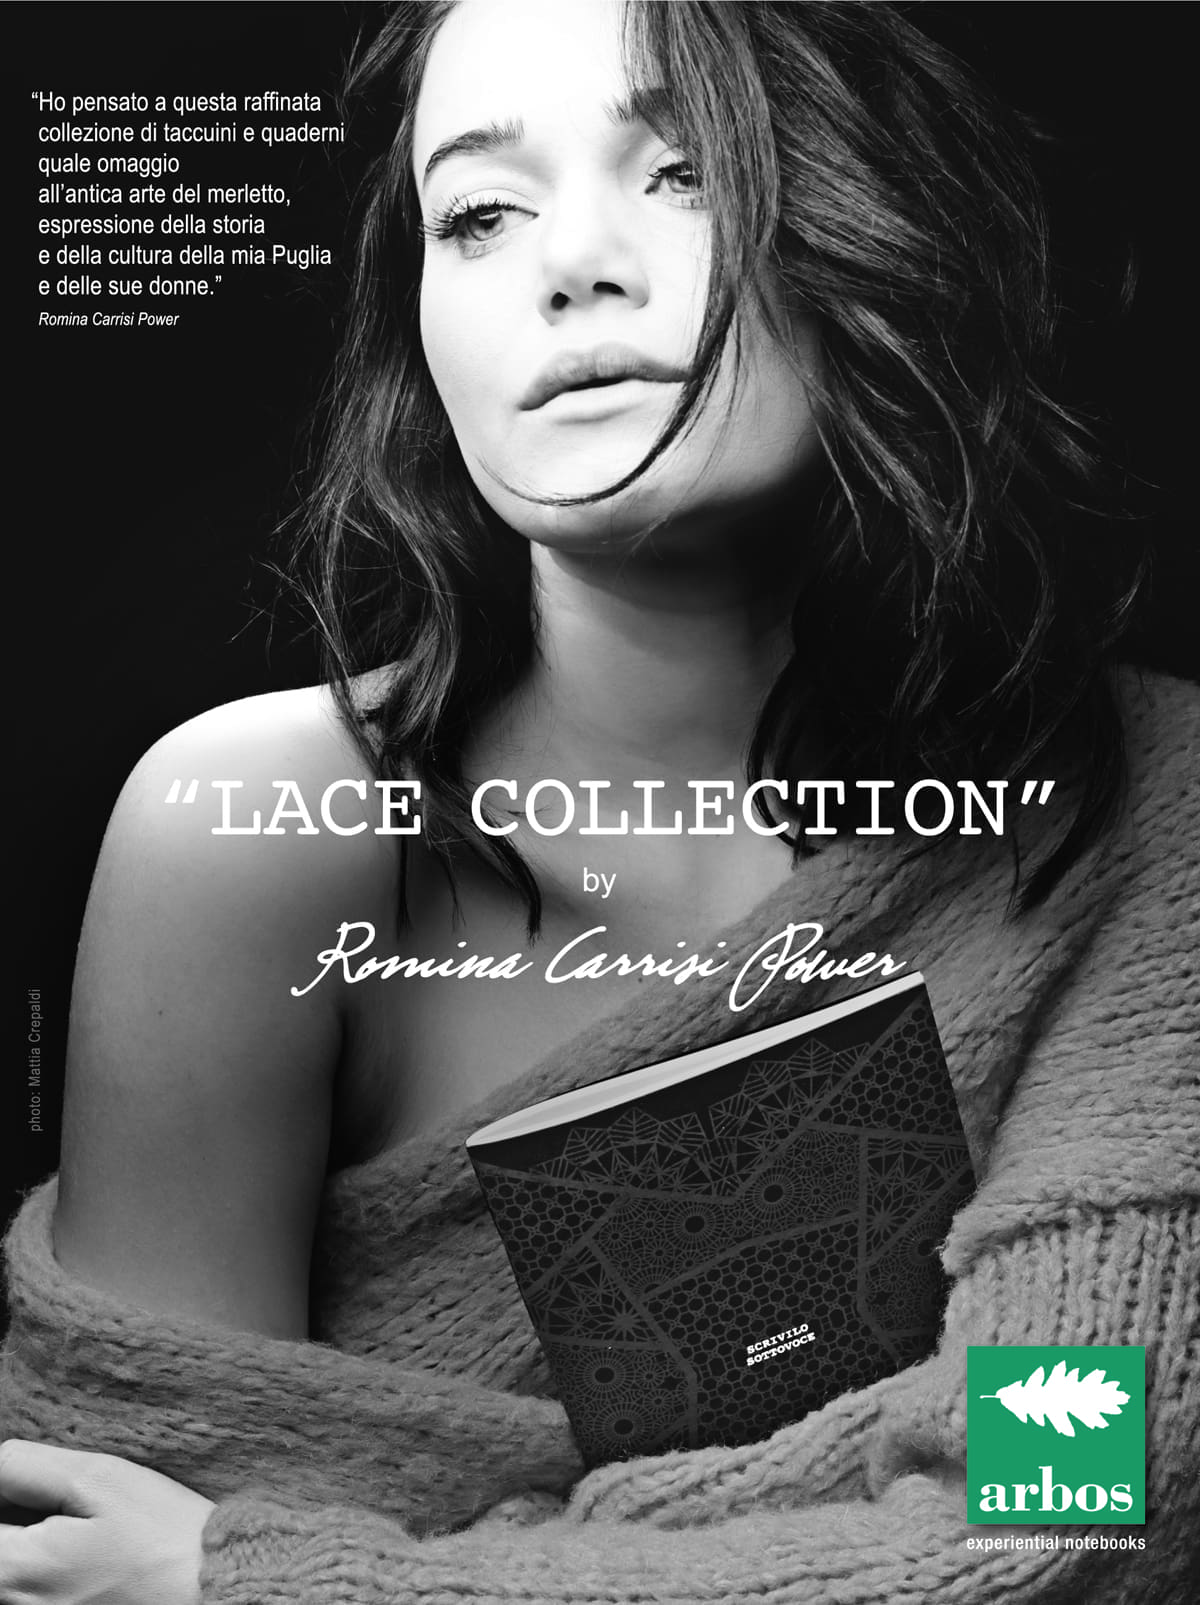 Lace Collection by Romina Carrisi Power: femminilità e stile